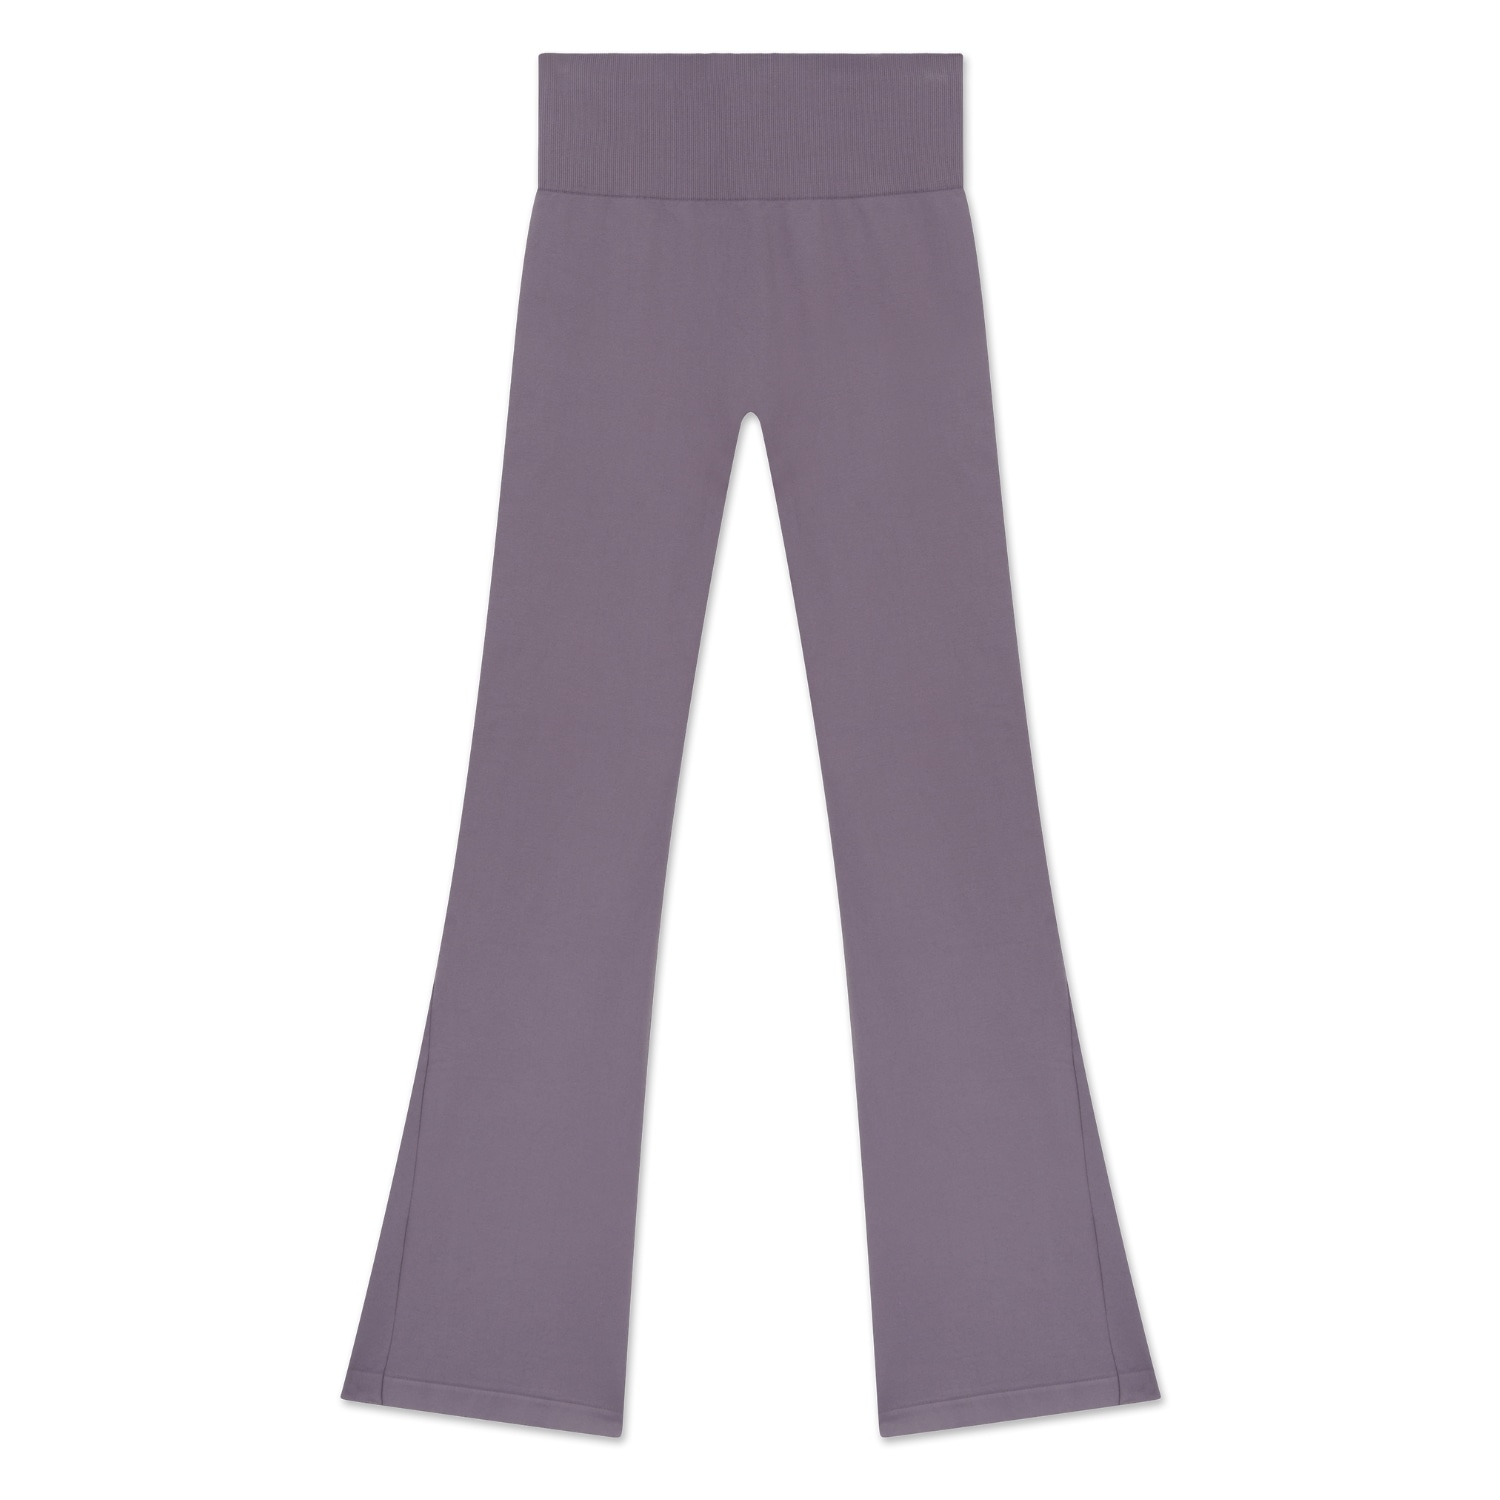 Jilla Active Women's Pink / Purple Radiance Flare Legging - Smoked Grape